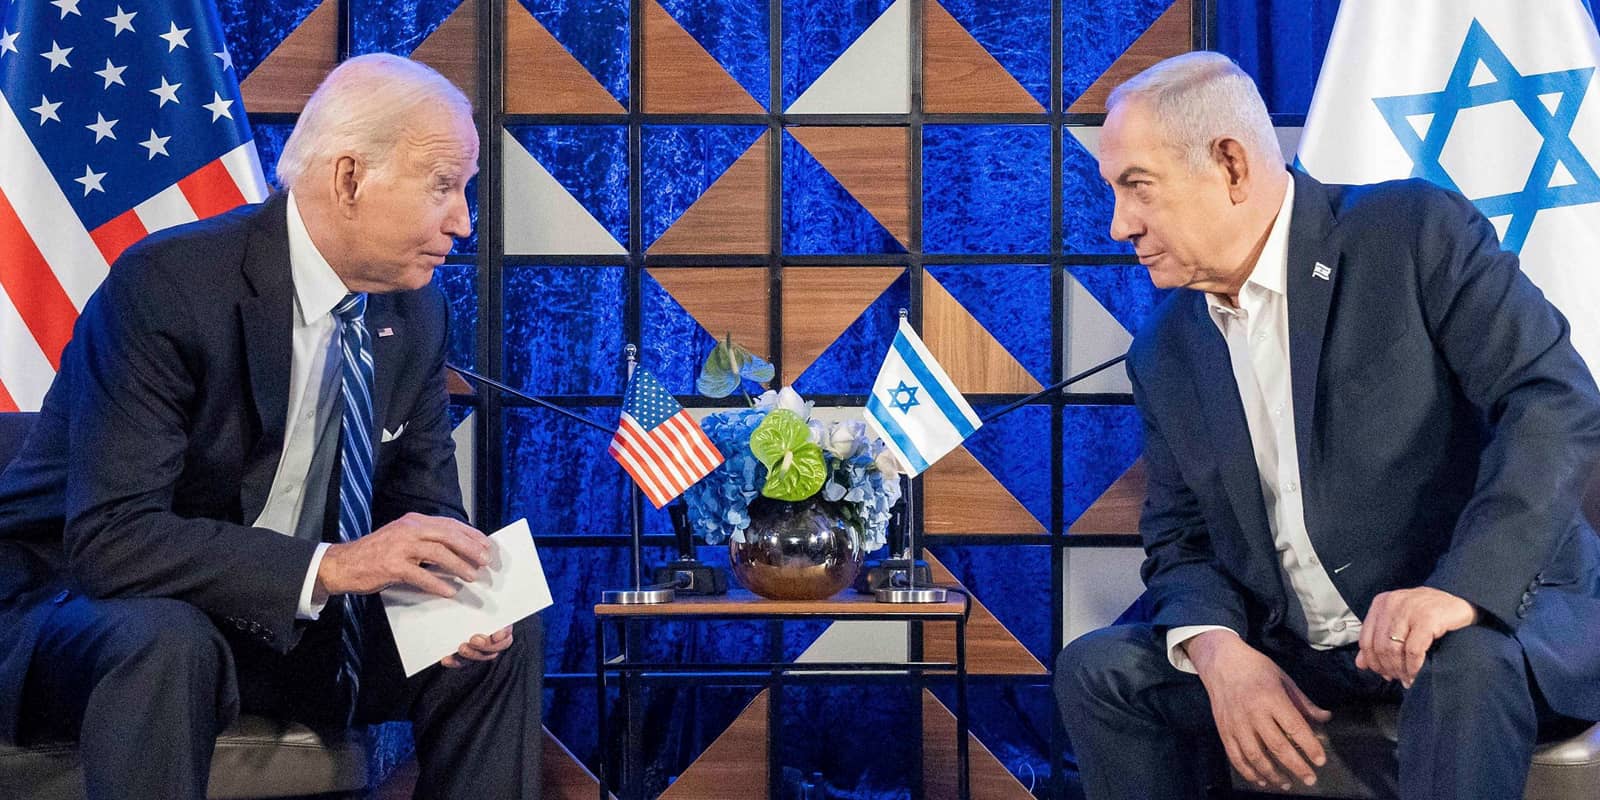 U.S President Joe Biden and Israeli Prime Minister Benjamin Netanyahu